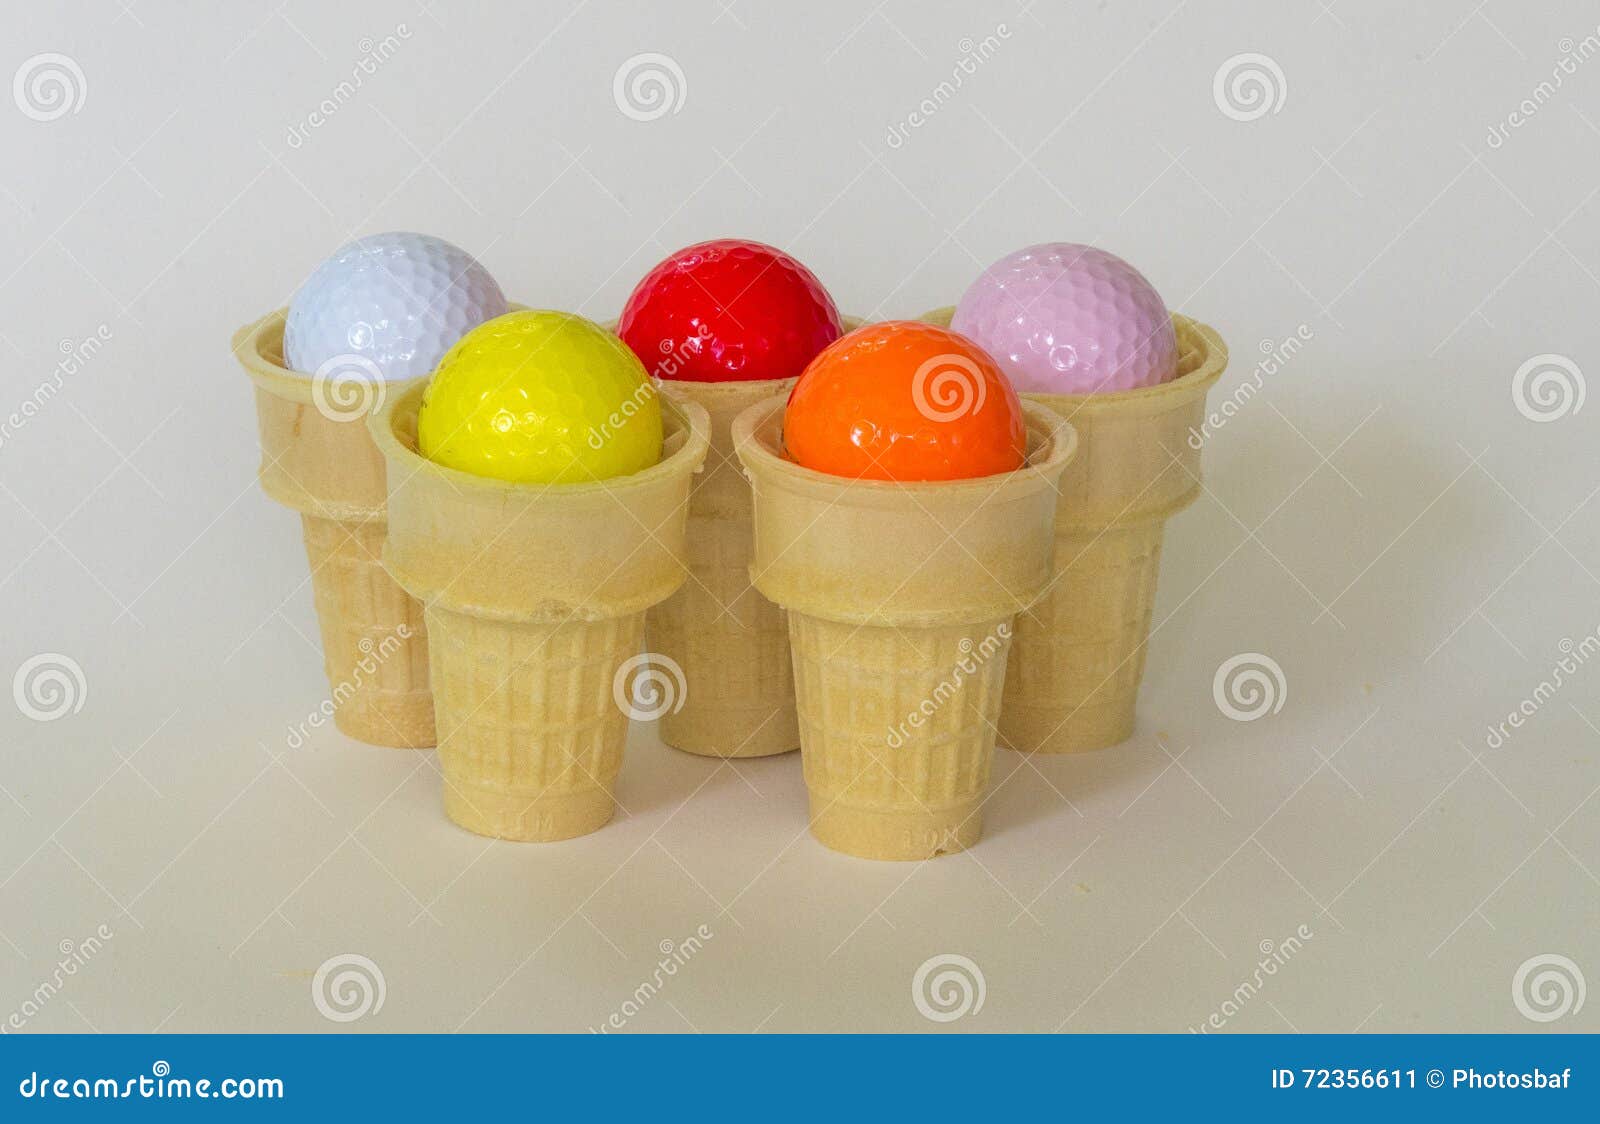 Ice Cream Golf Ball